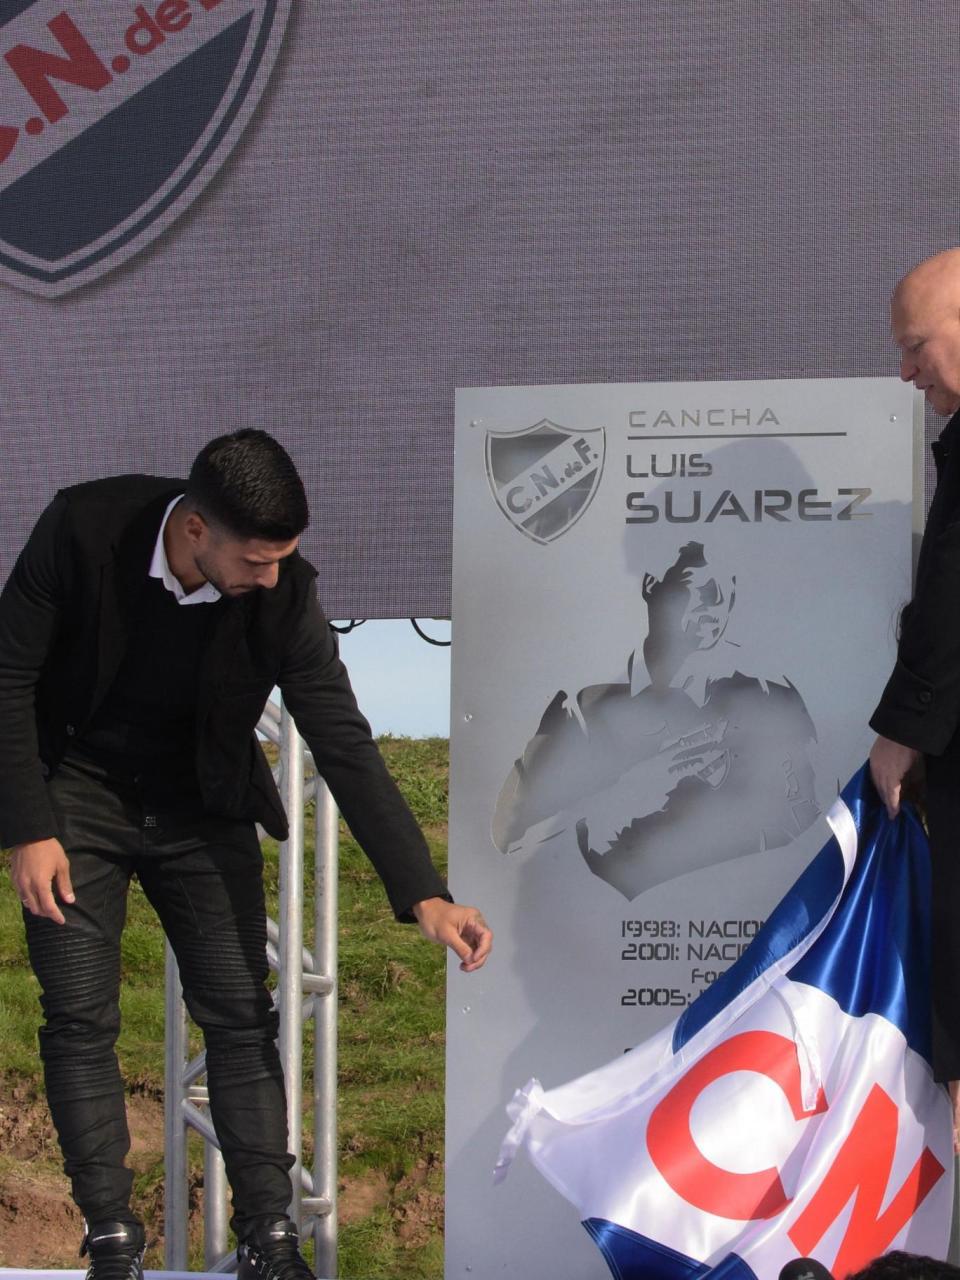 Suarez opened the new training pitch alongside Nacional president Jose Luis Rodriguez (AFP/Getty Images)